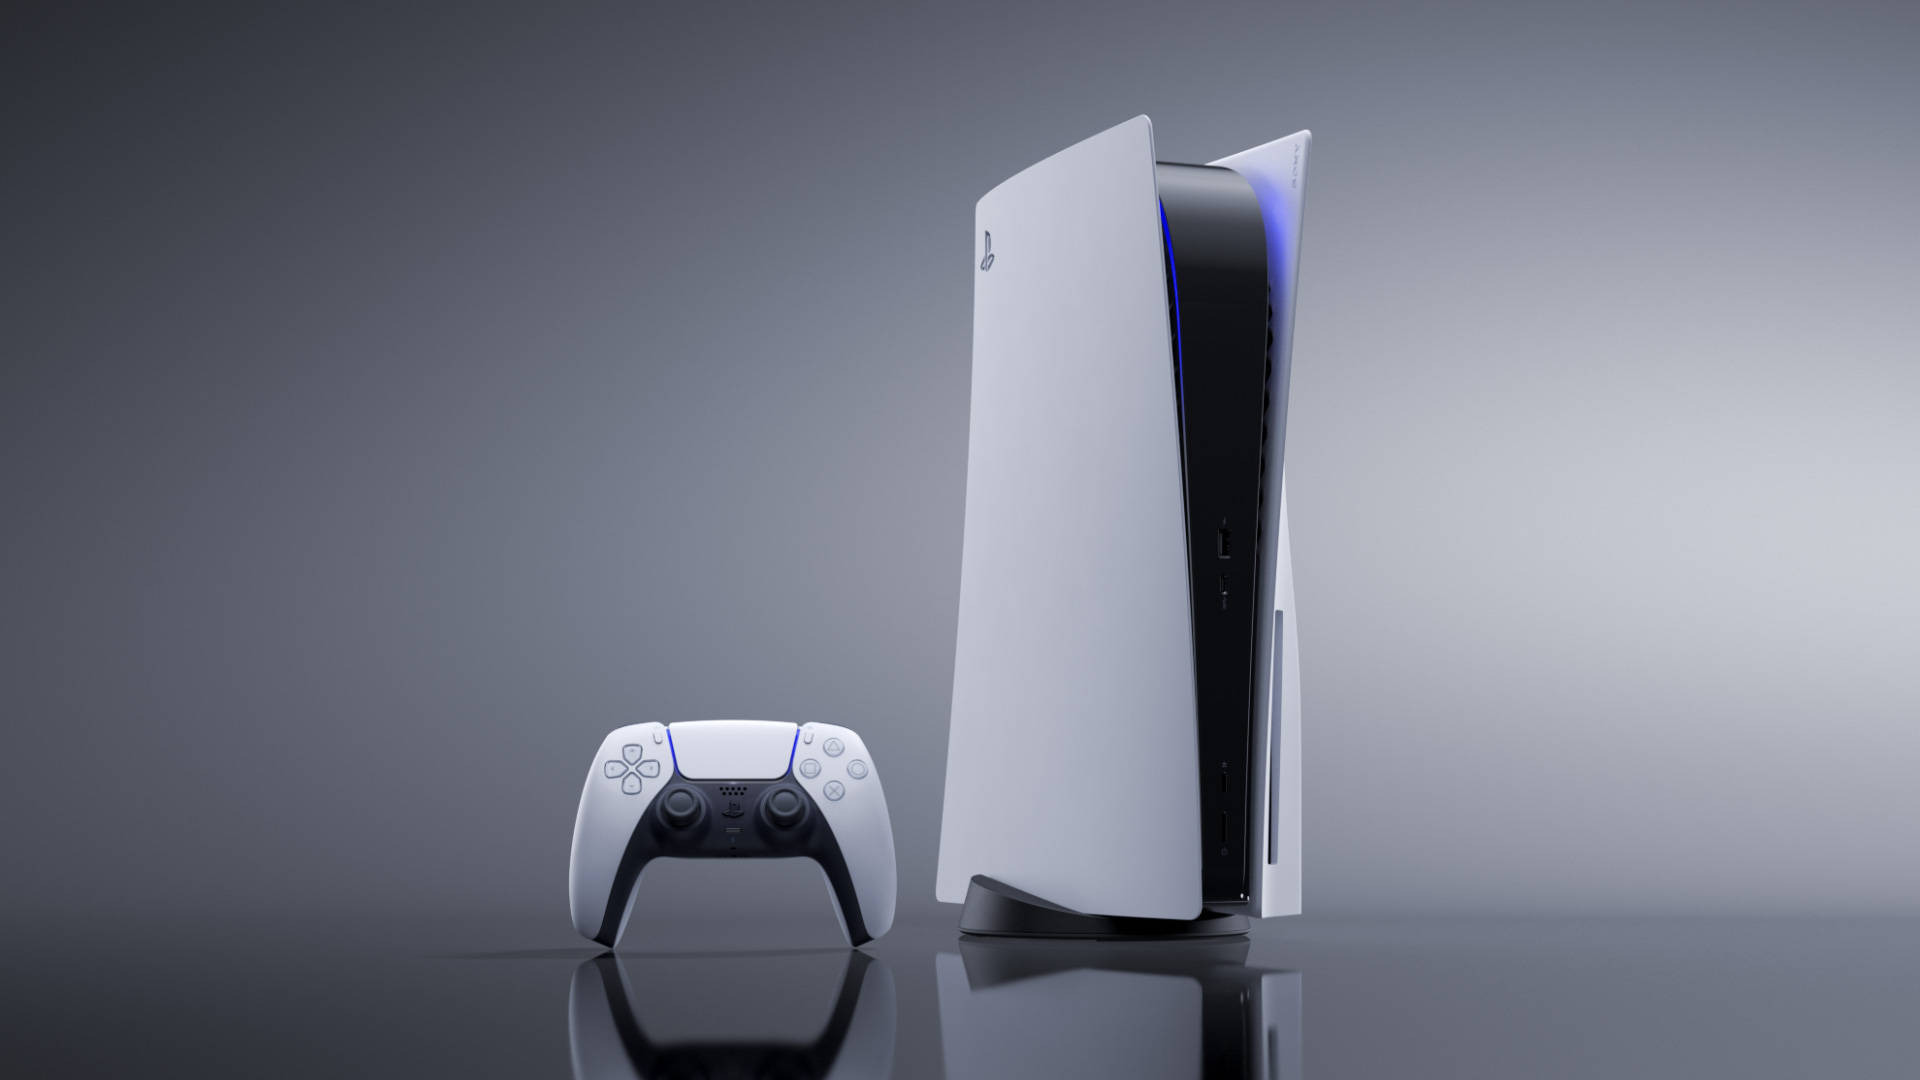 PlayStation 5 UI Walkthrough (60FPS) - PS Store, PS Plus, PS Now, Settings,  Etc. 